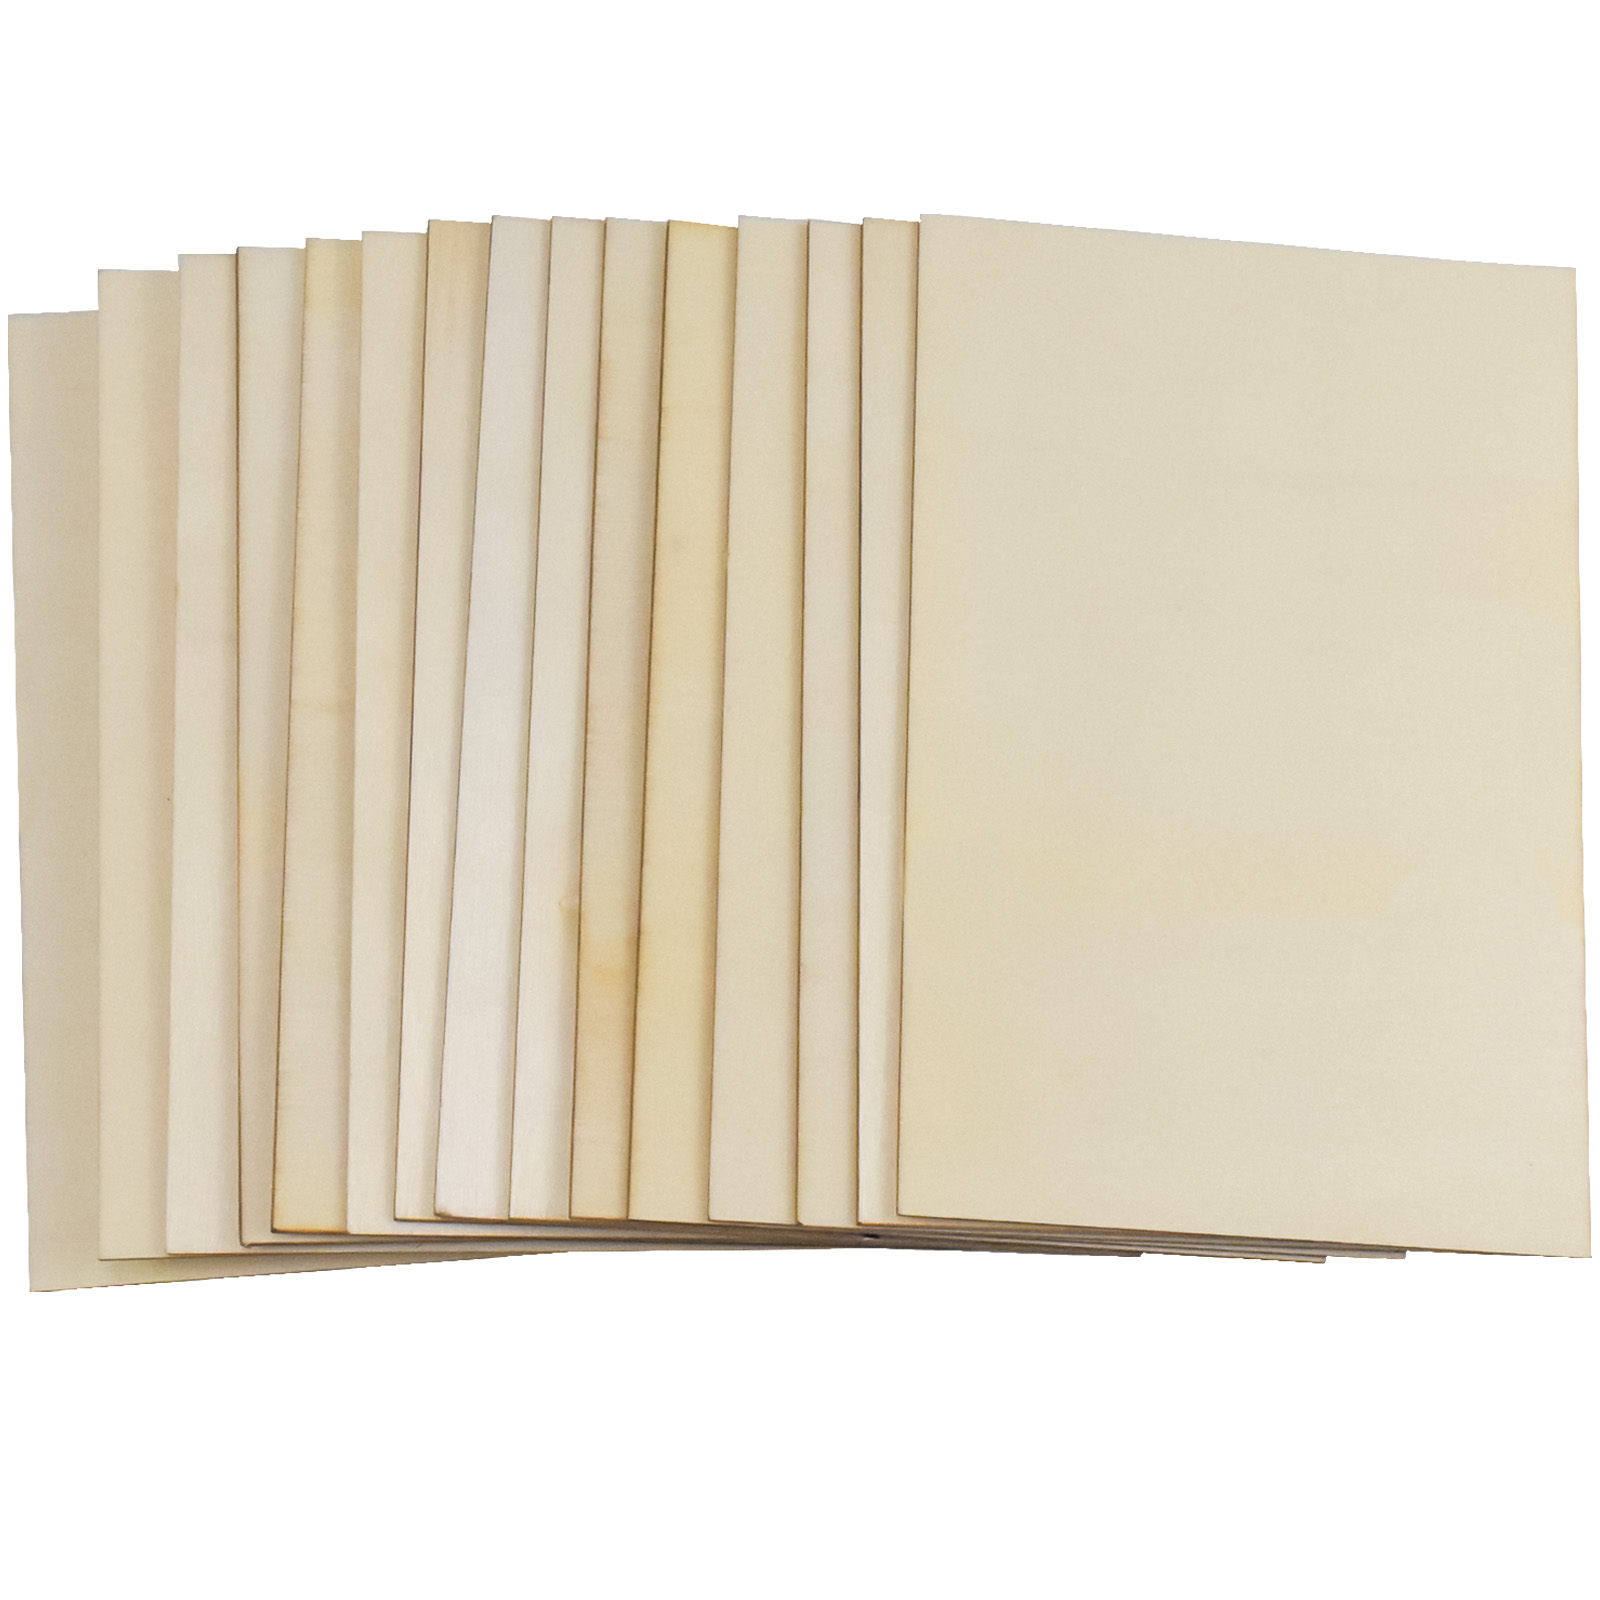 Thin Balsawood Wood Sheets For Diy Craft Wood Squares - Temu